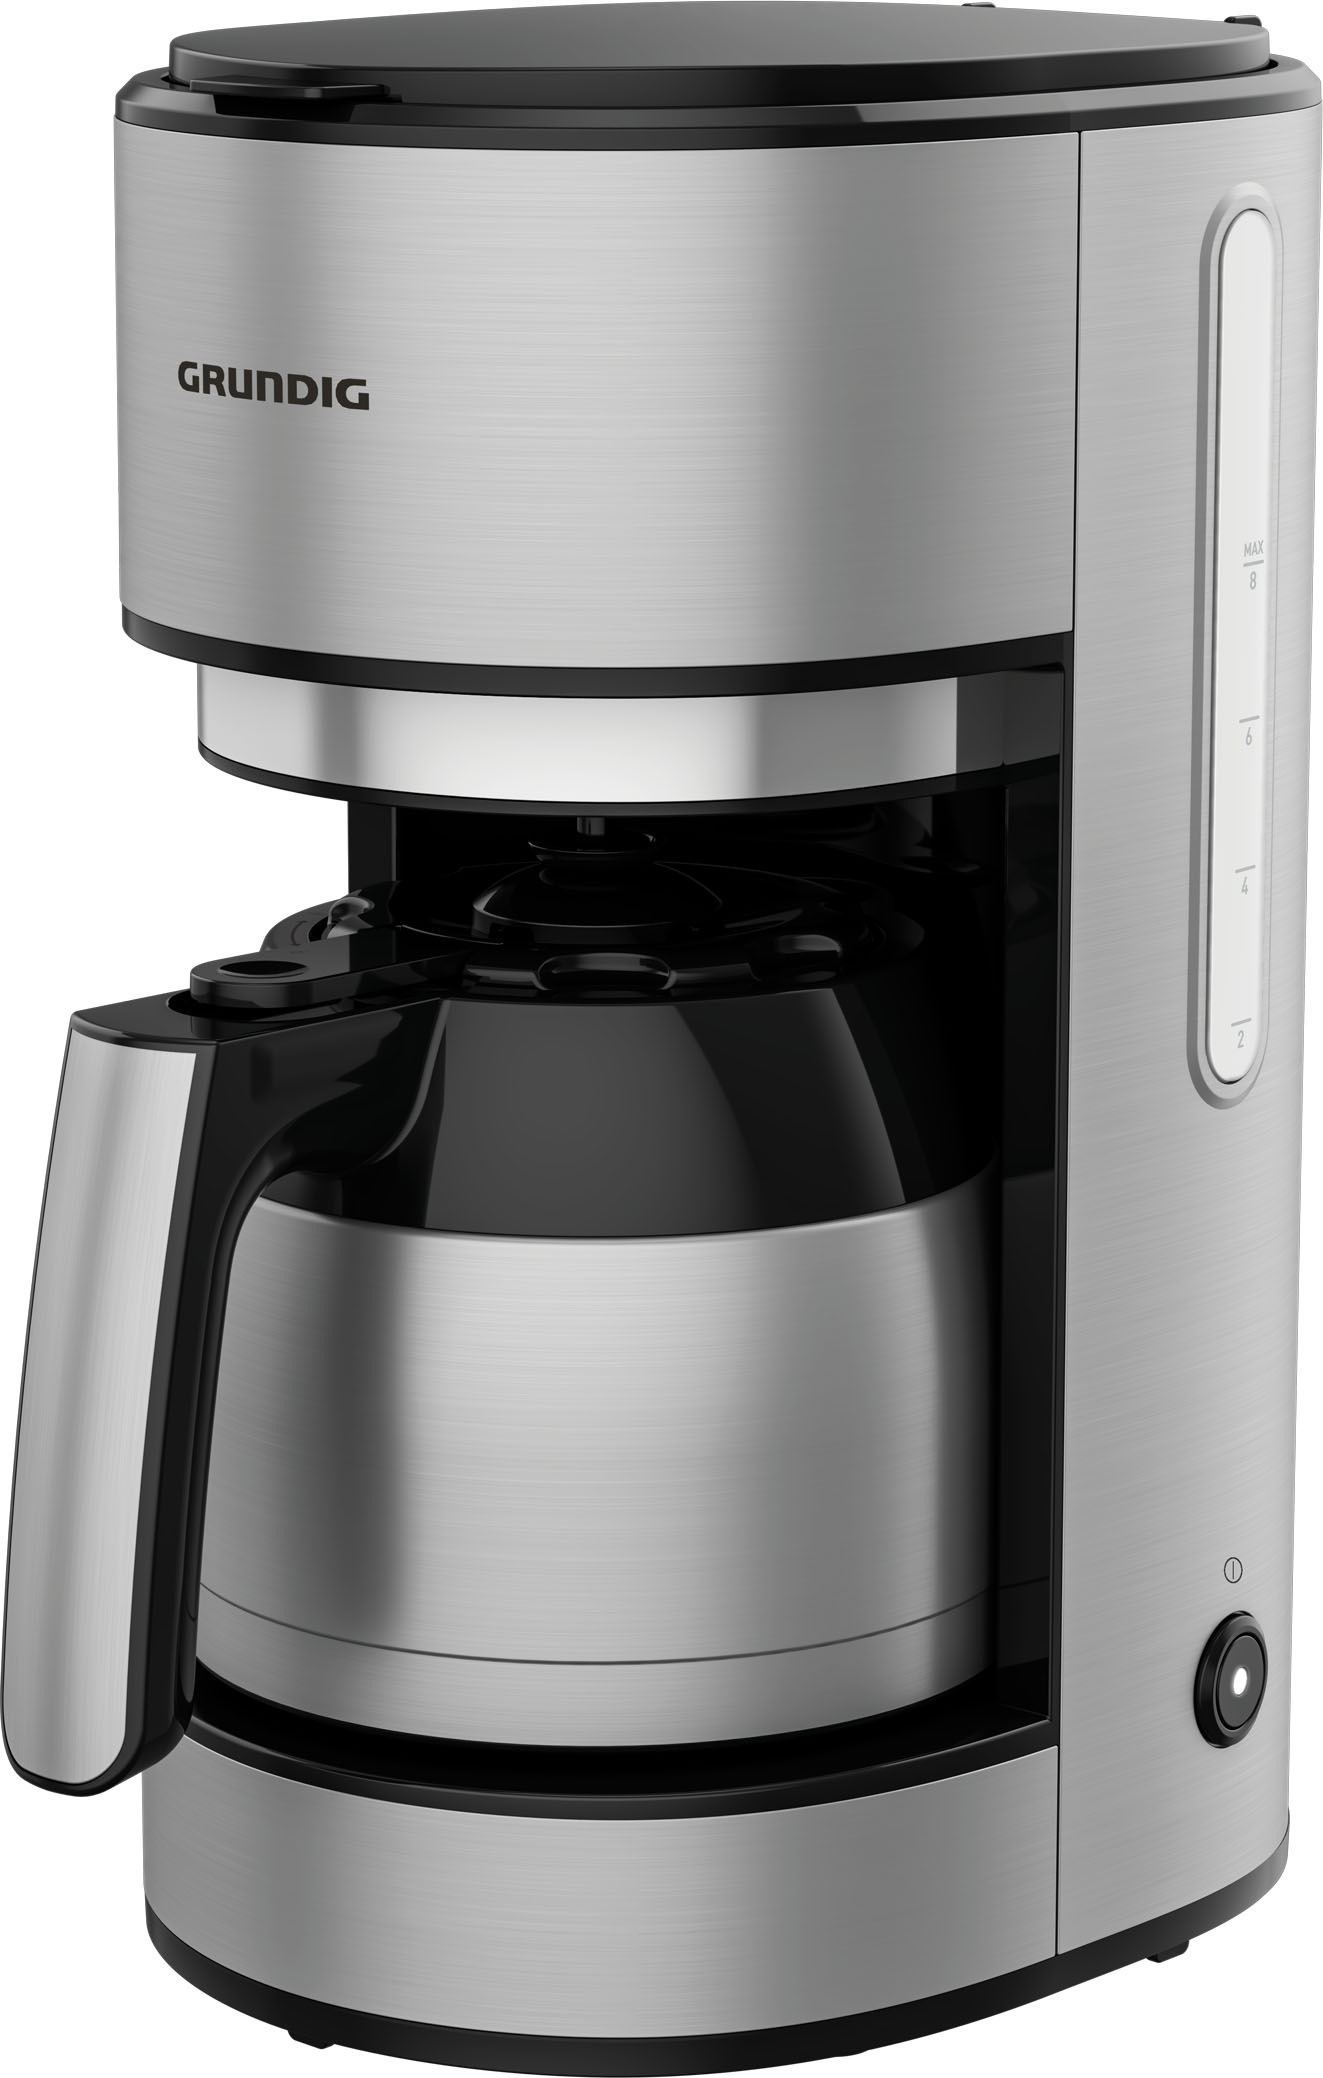 Grundig Filterkaffeemaschine »KM 5620 T«, 1 l Kaffeekanne